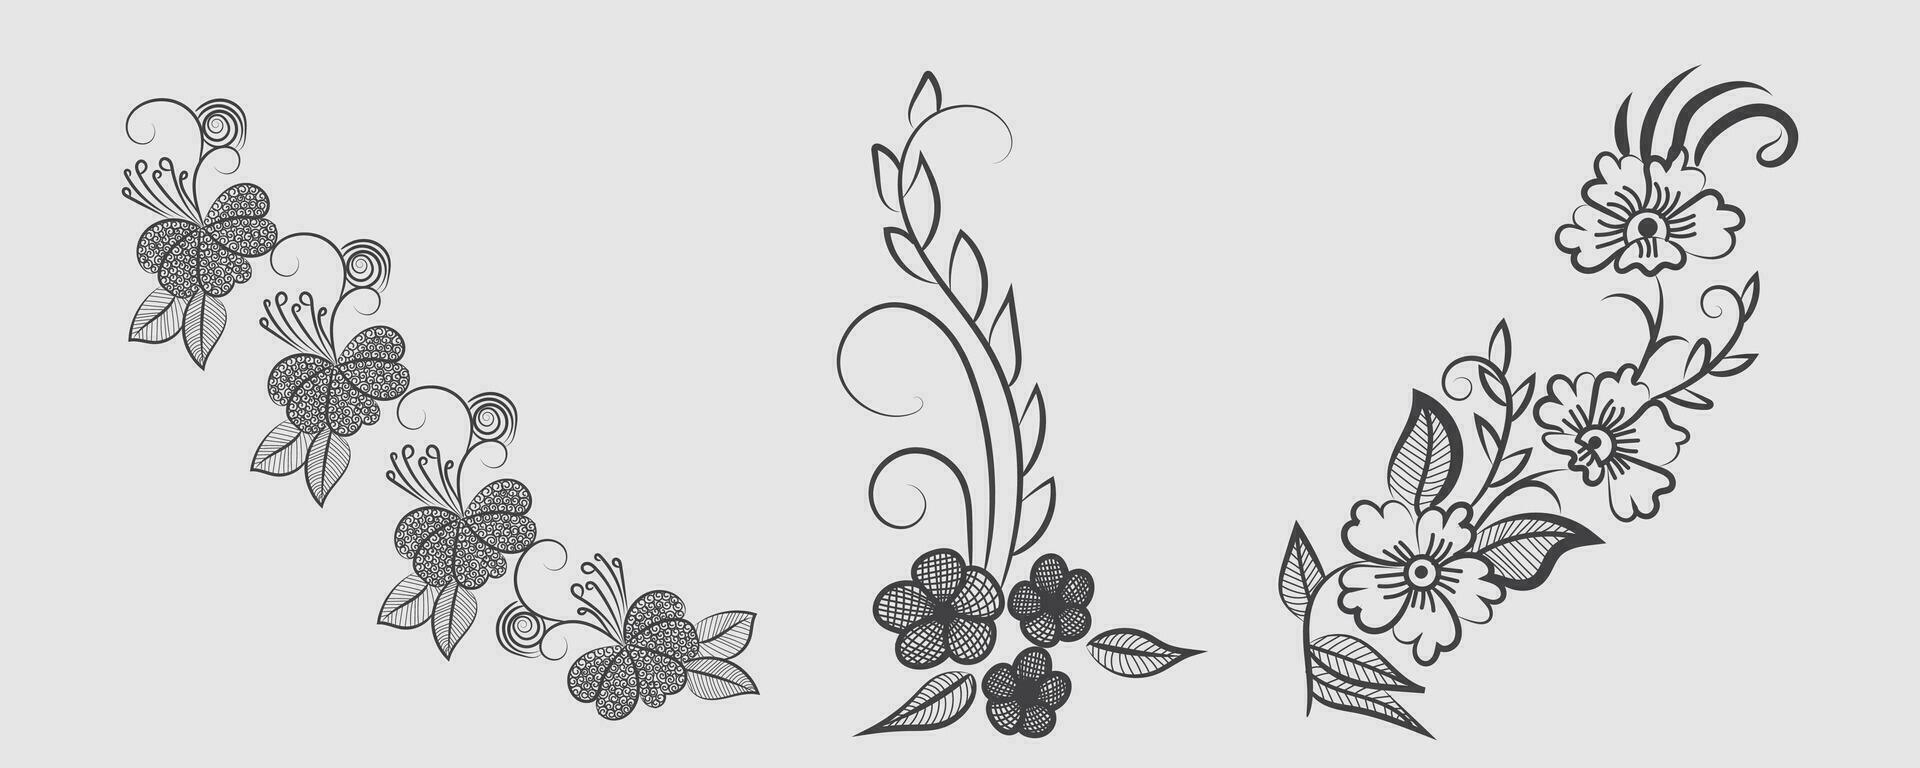 Free Vector graphical line art design of flower illustration for coloring page design